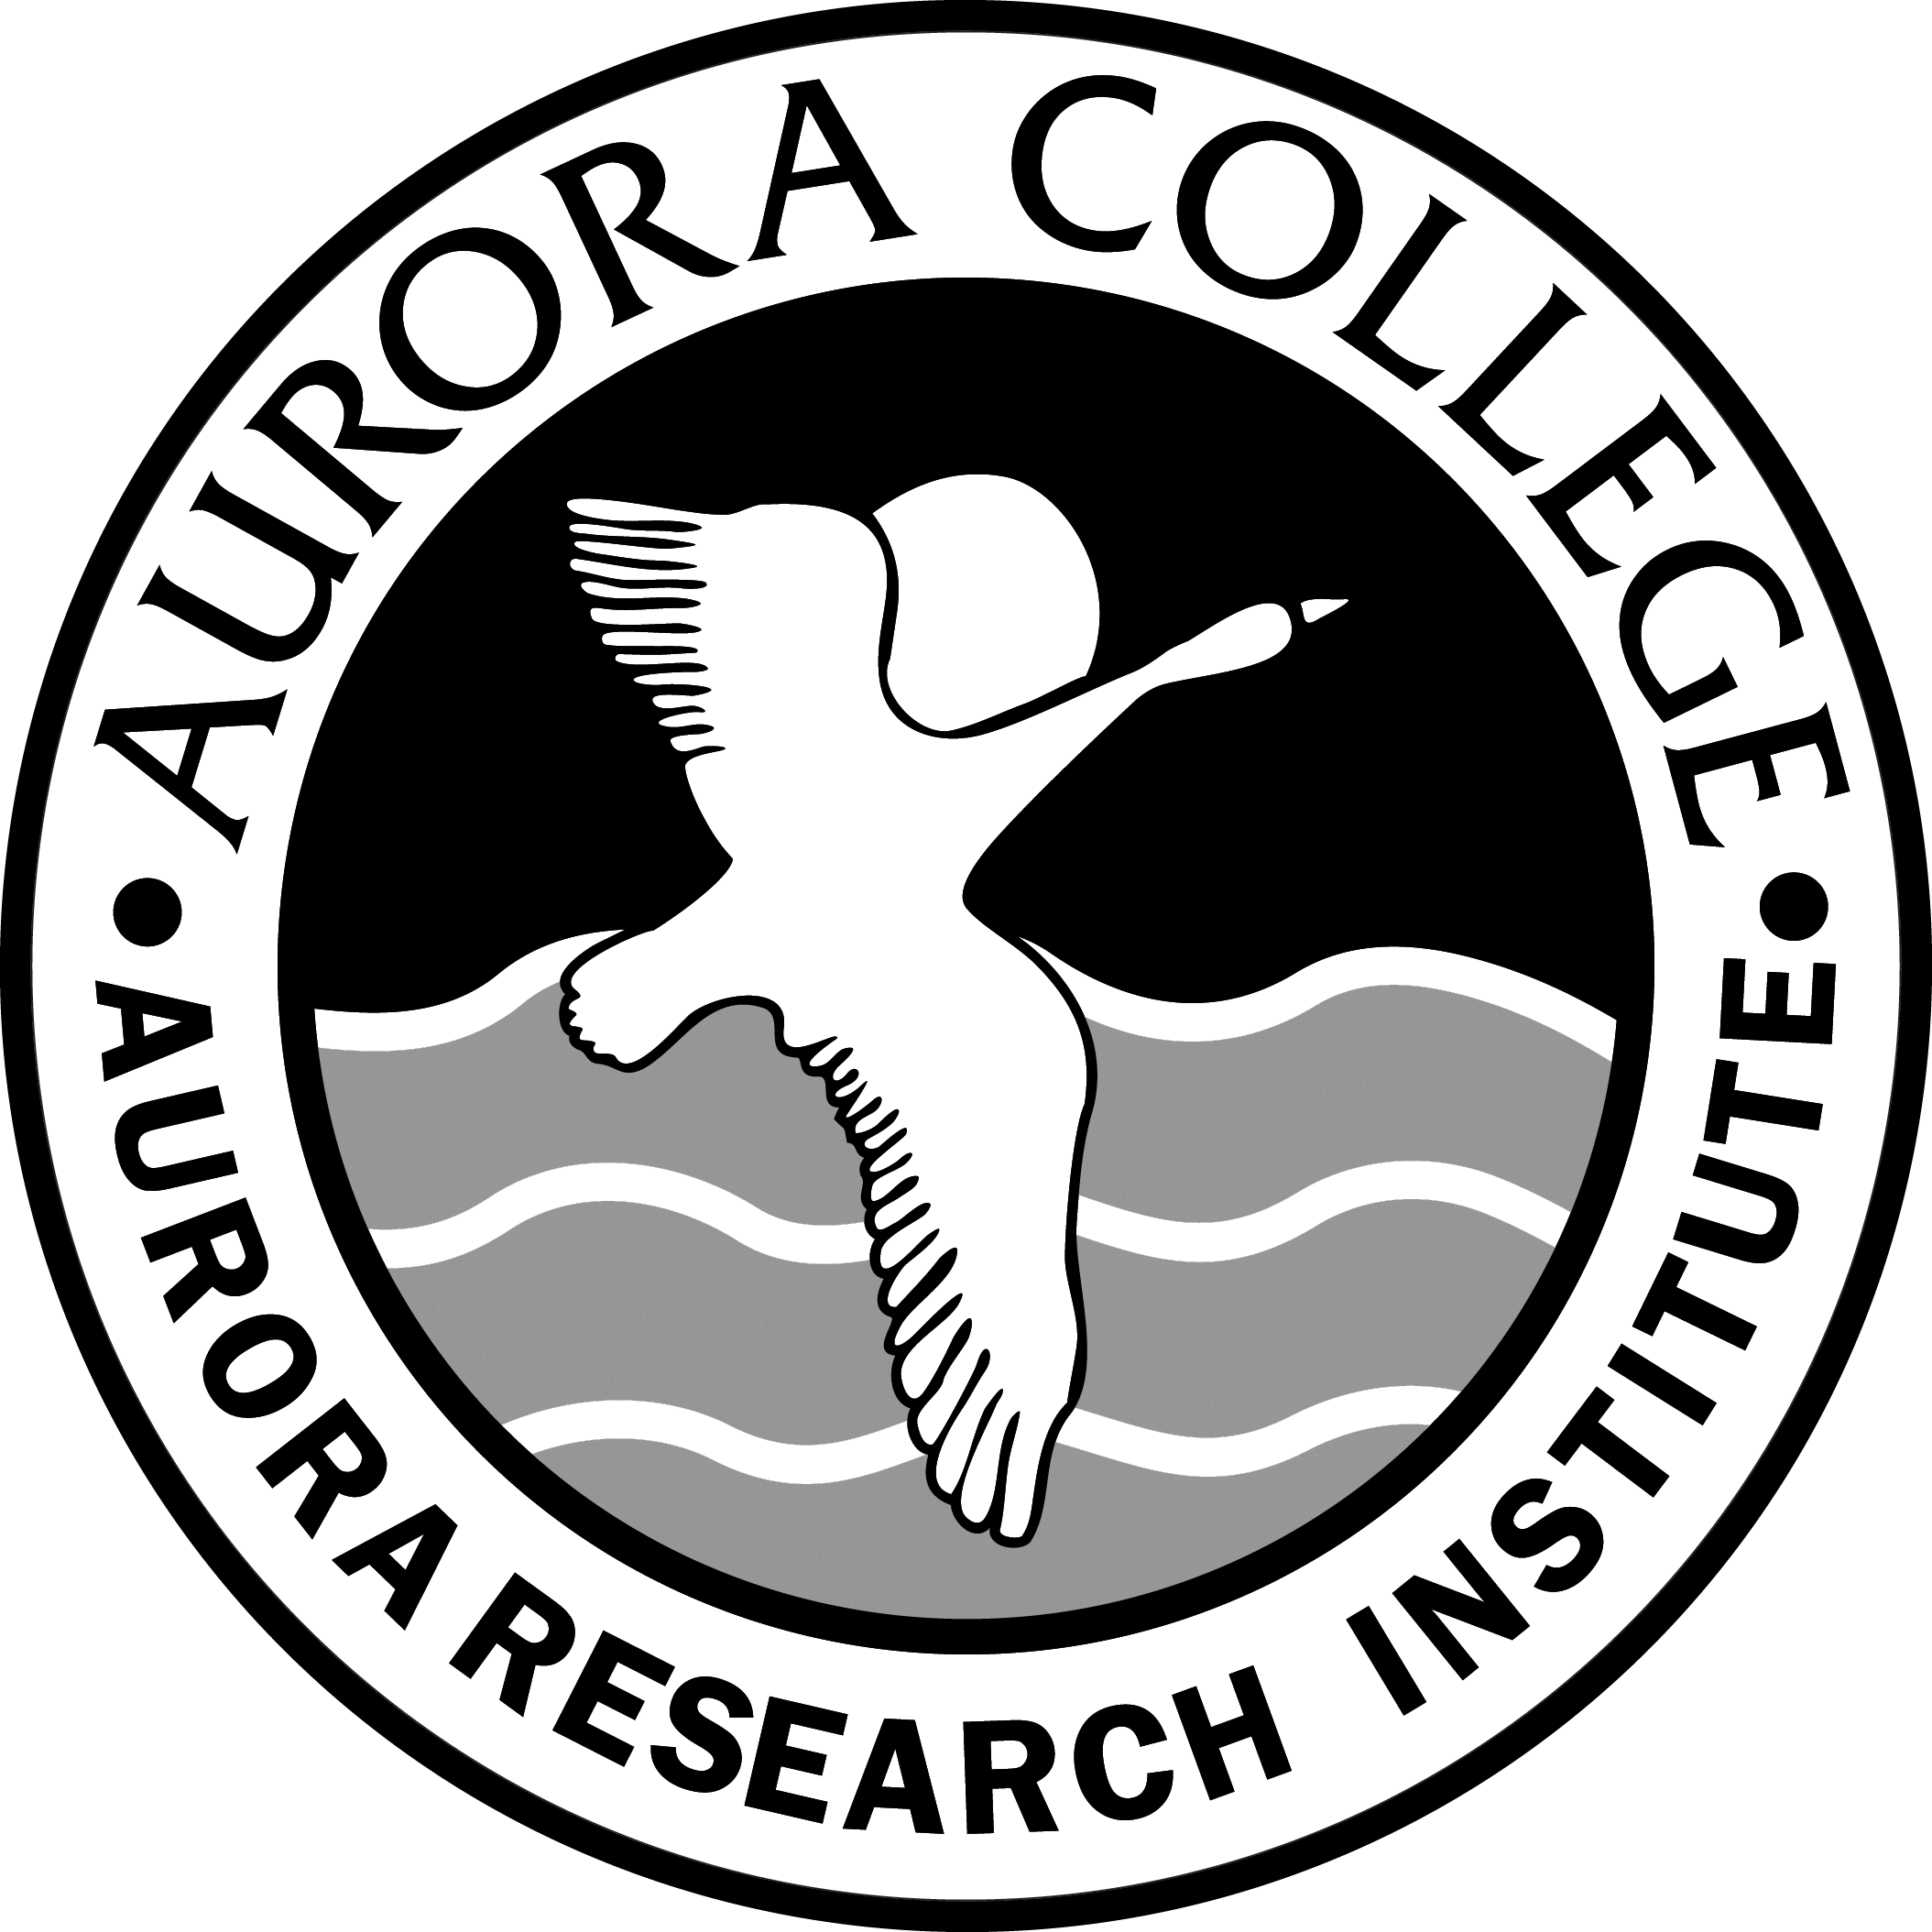 Black Circular Logo - Logos. Aurora Research Institute